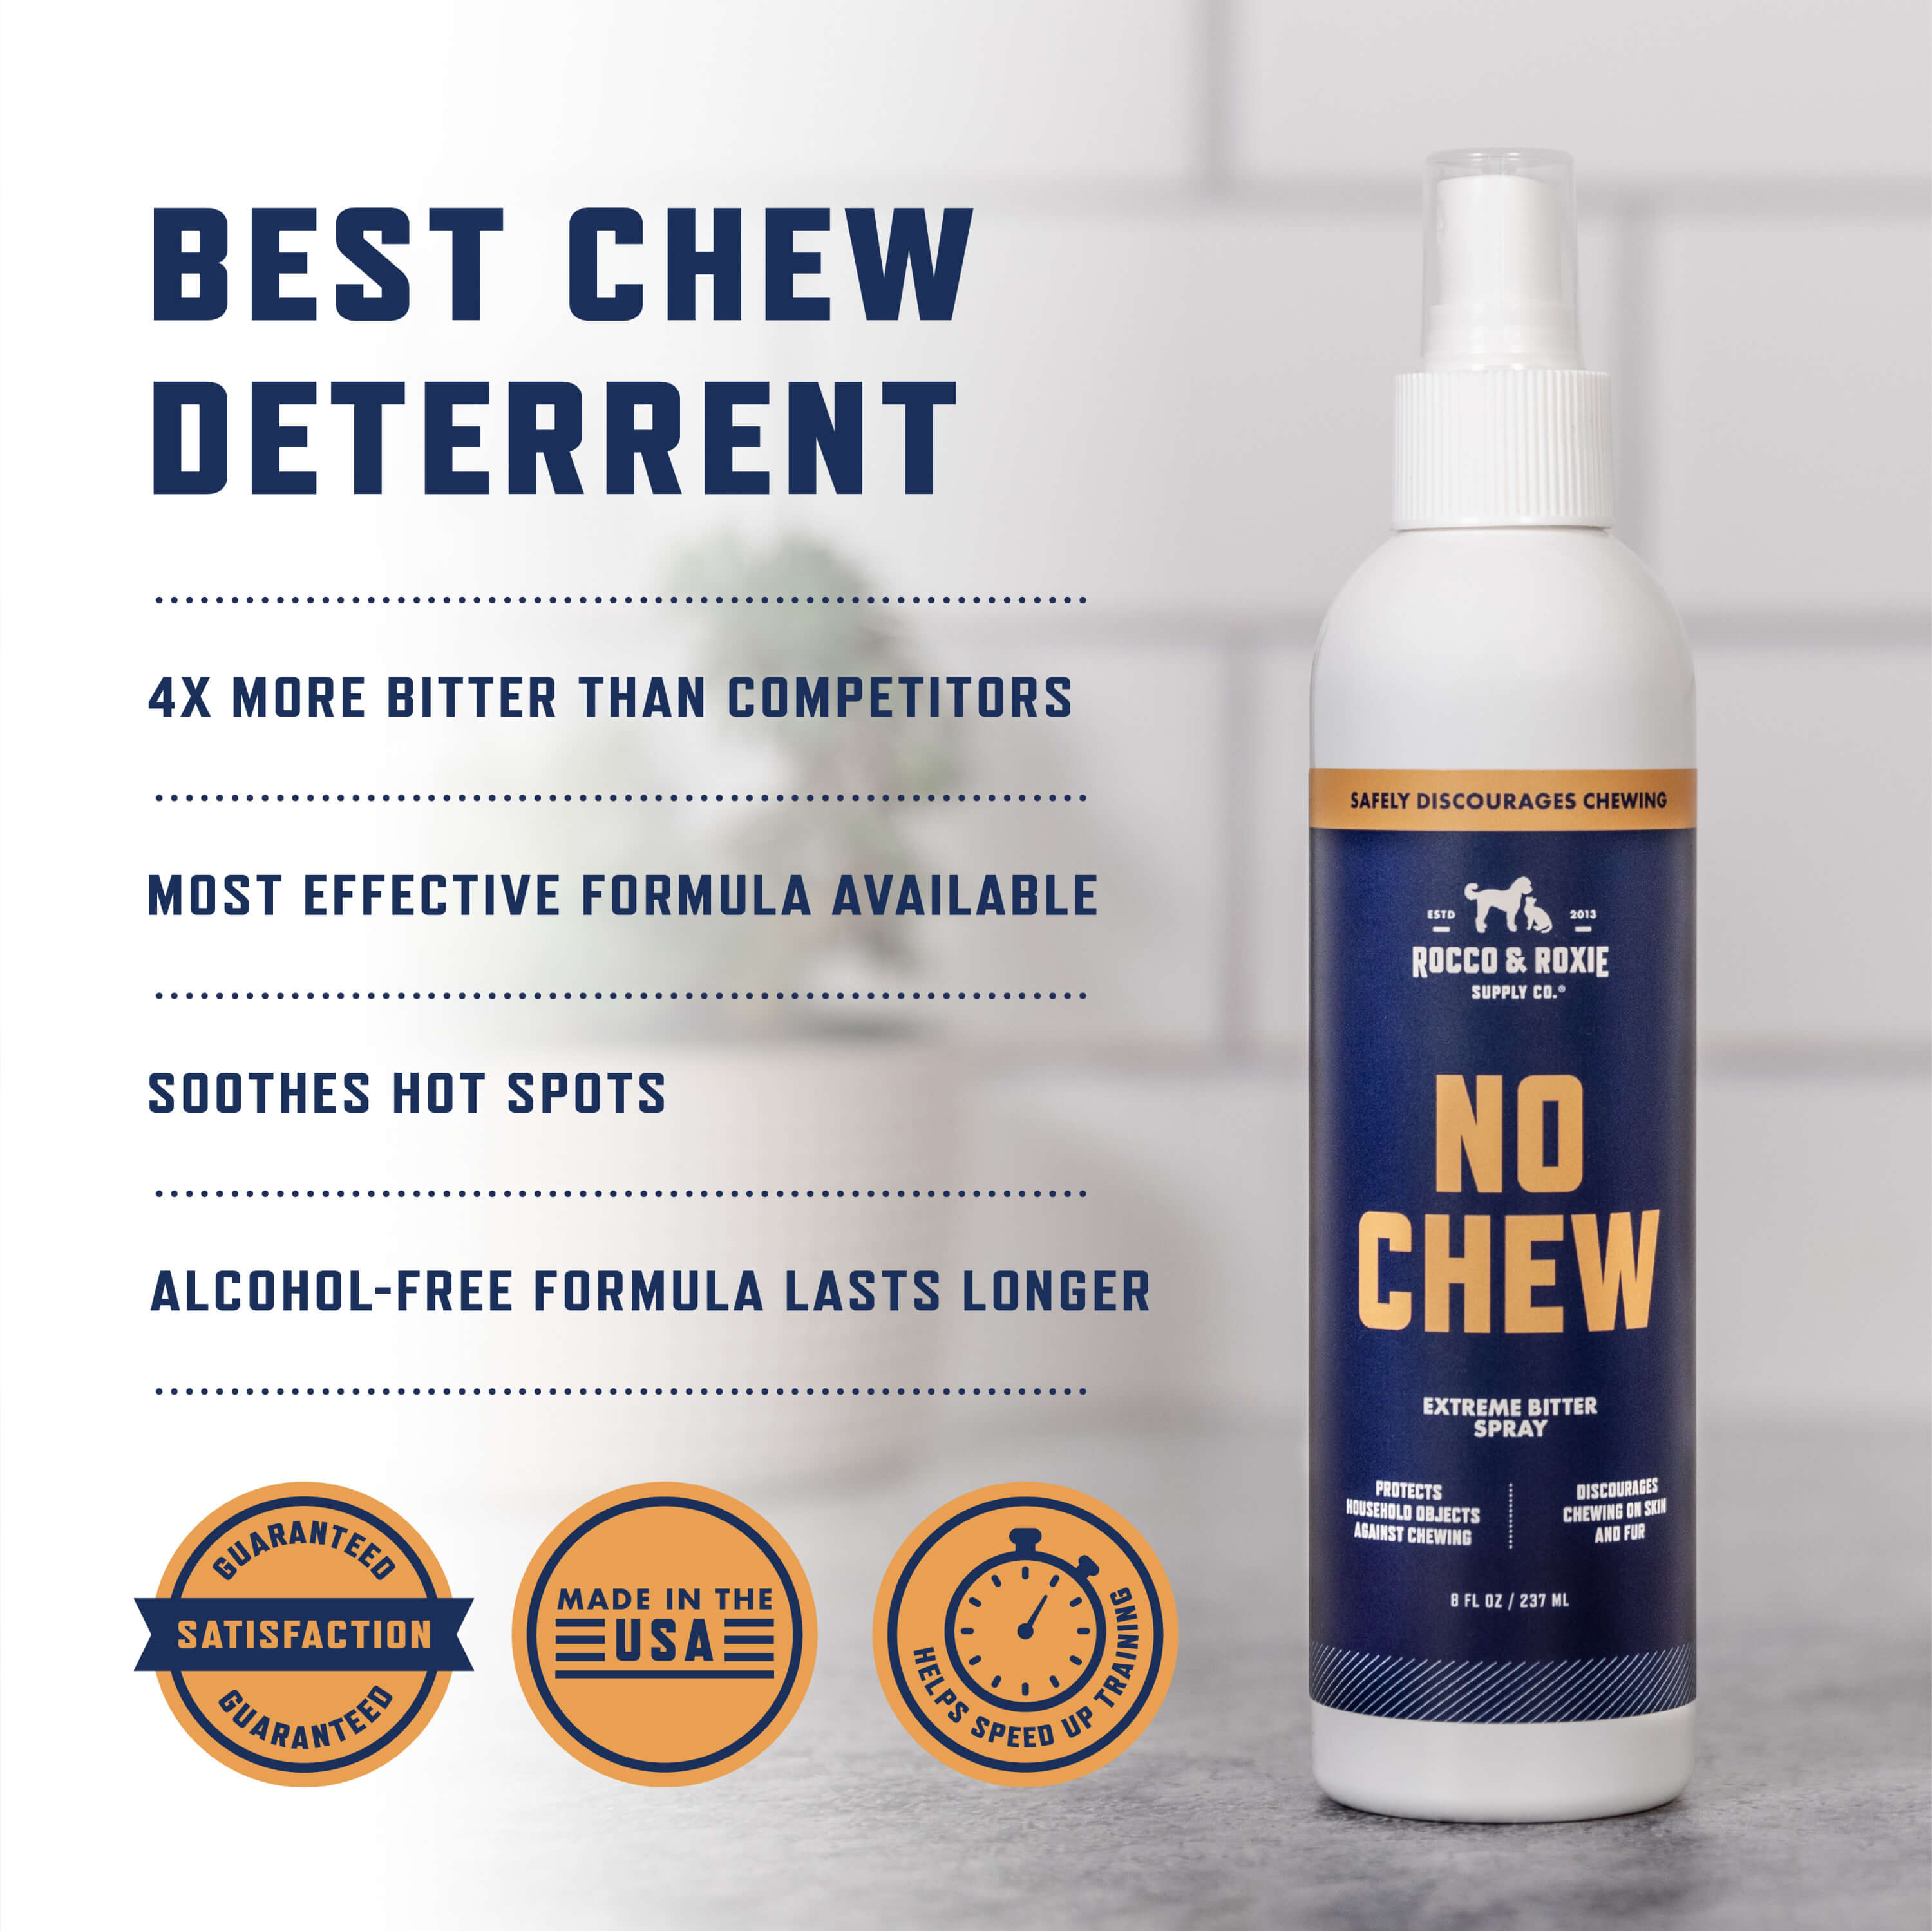 No Chew Extreme Bitter Spray – Rocco & Roxie Supply Co.